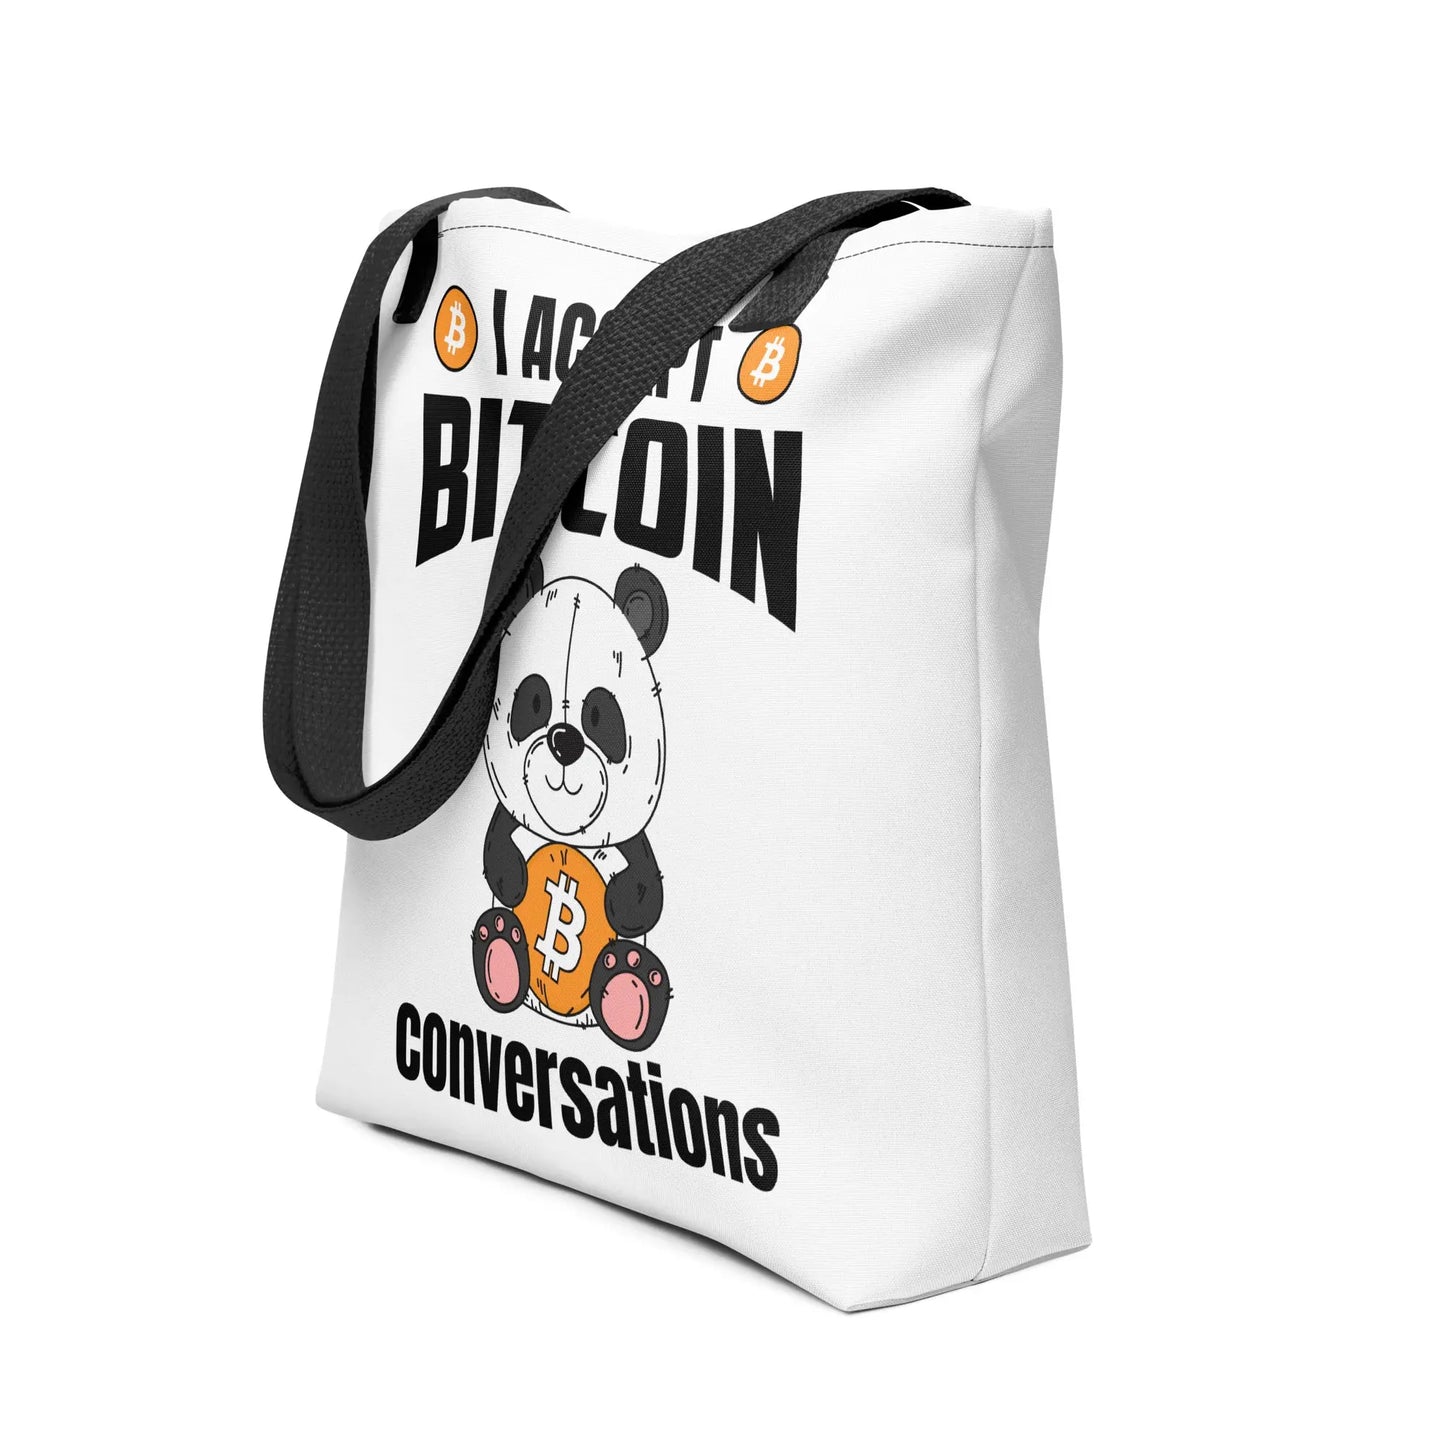 I Accept Bitcoin Conversations - Bitcoin Tote Bag - Store of Value